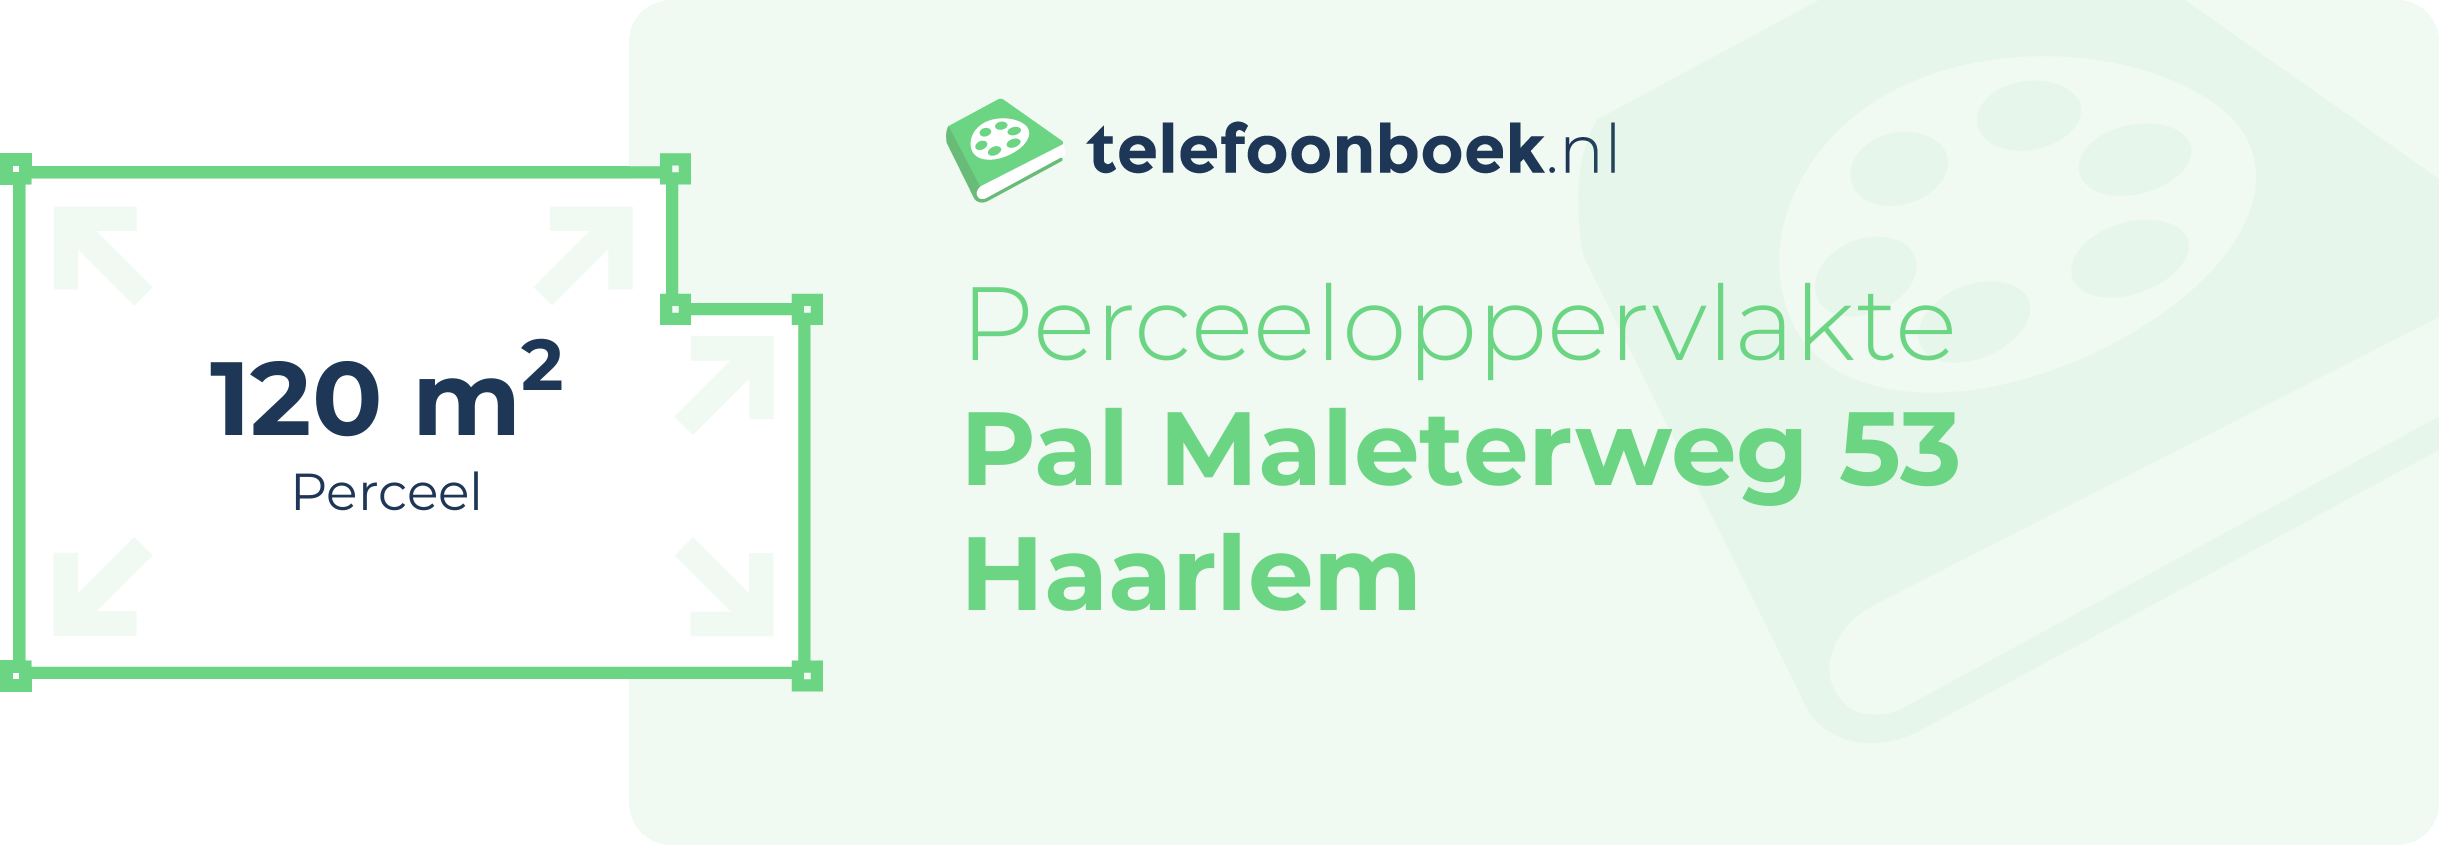 Perceeloppervlakte Pal Maleterweg 53 Haarlem